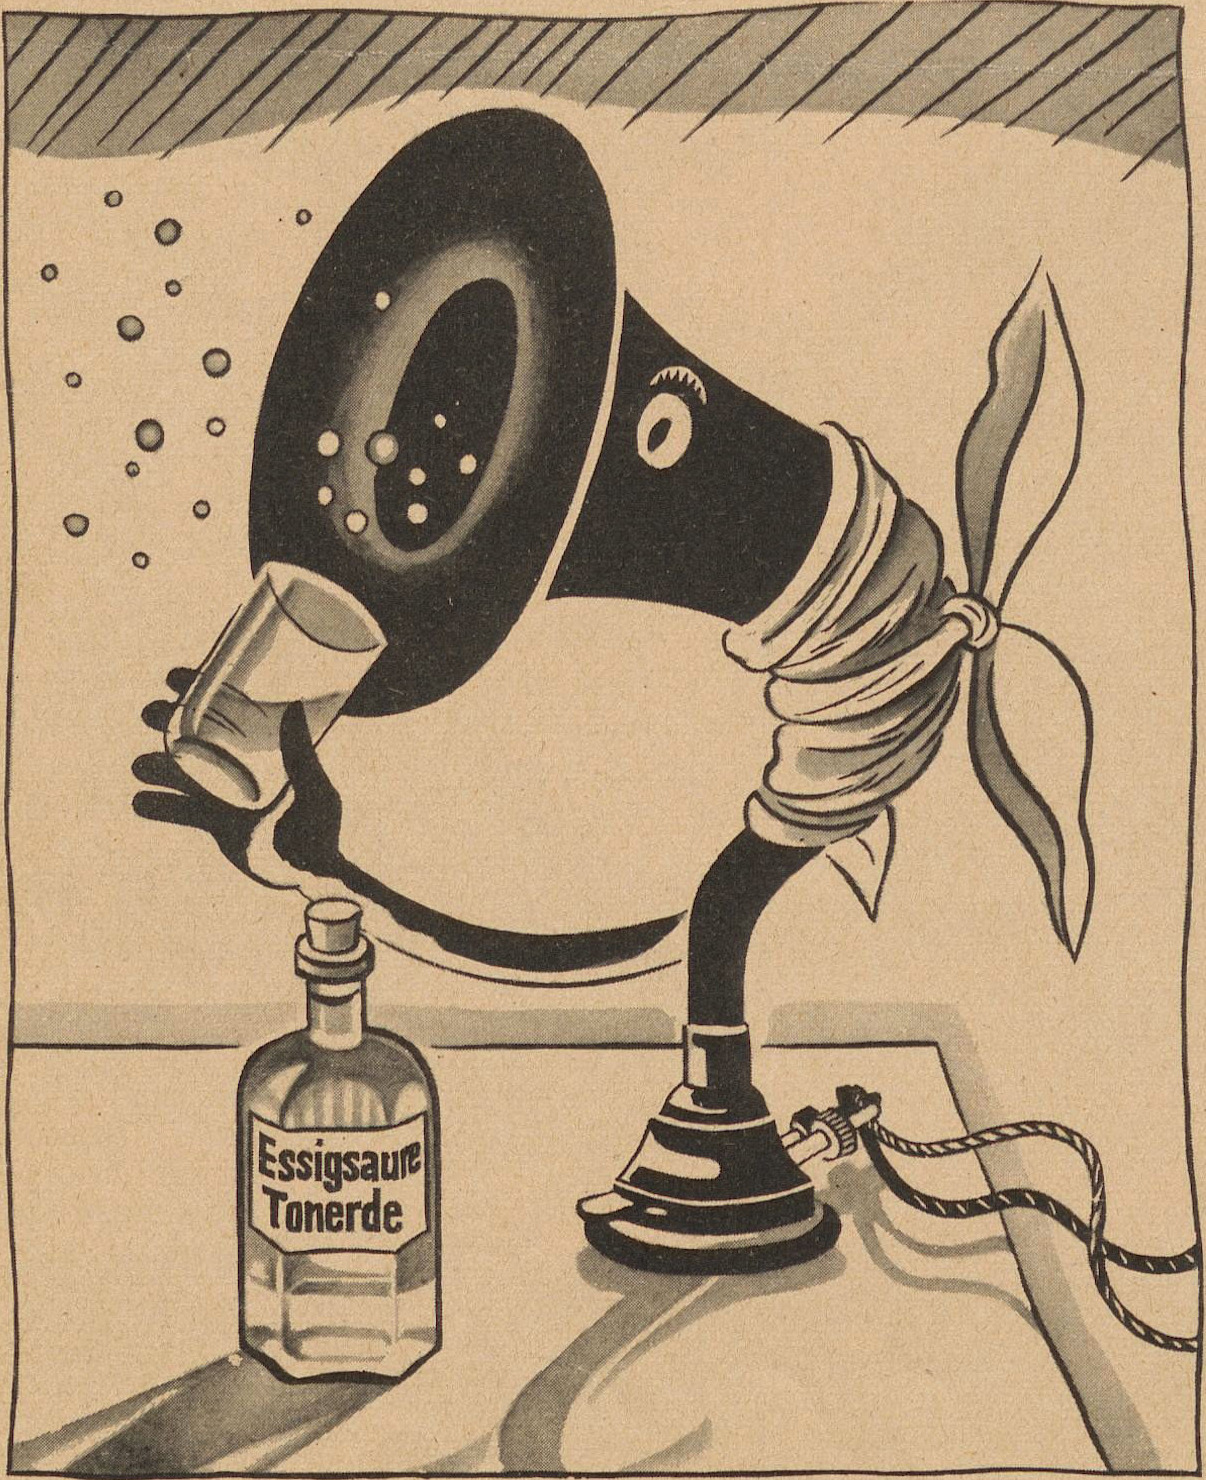 danskjavlarna:<br /><br />
“ From Fliegende Blätter, 1934.<br /><br />
My Strange & Unusual Site | Books | Videos | Music | Etsy<br /><br />
”